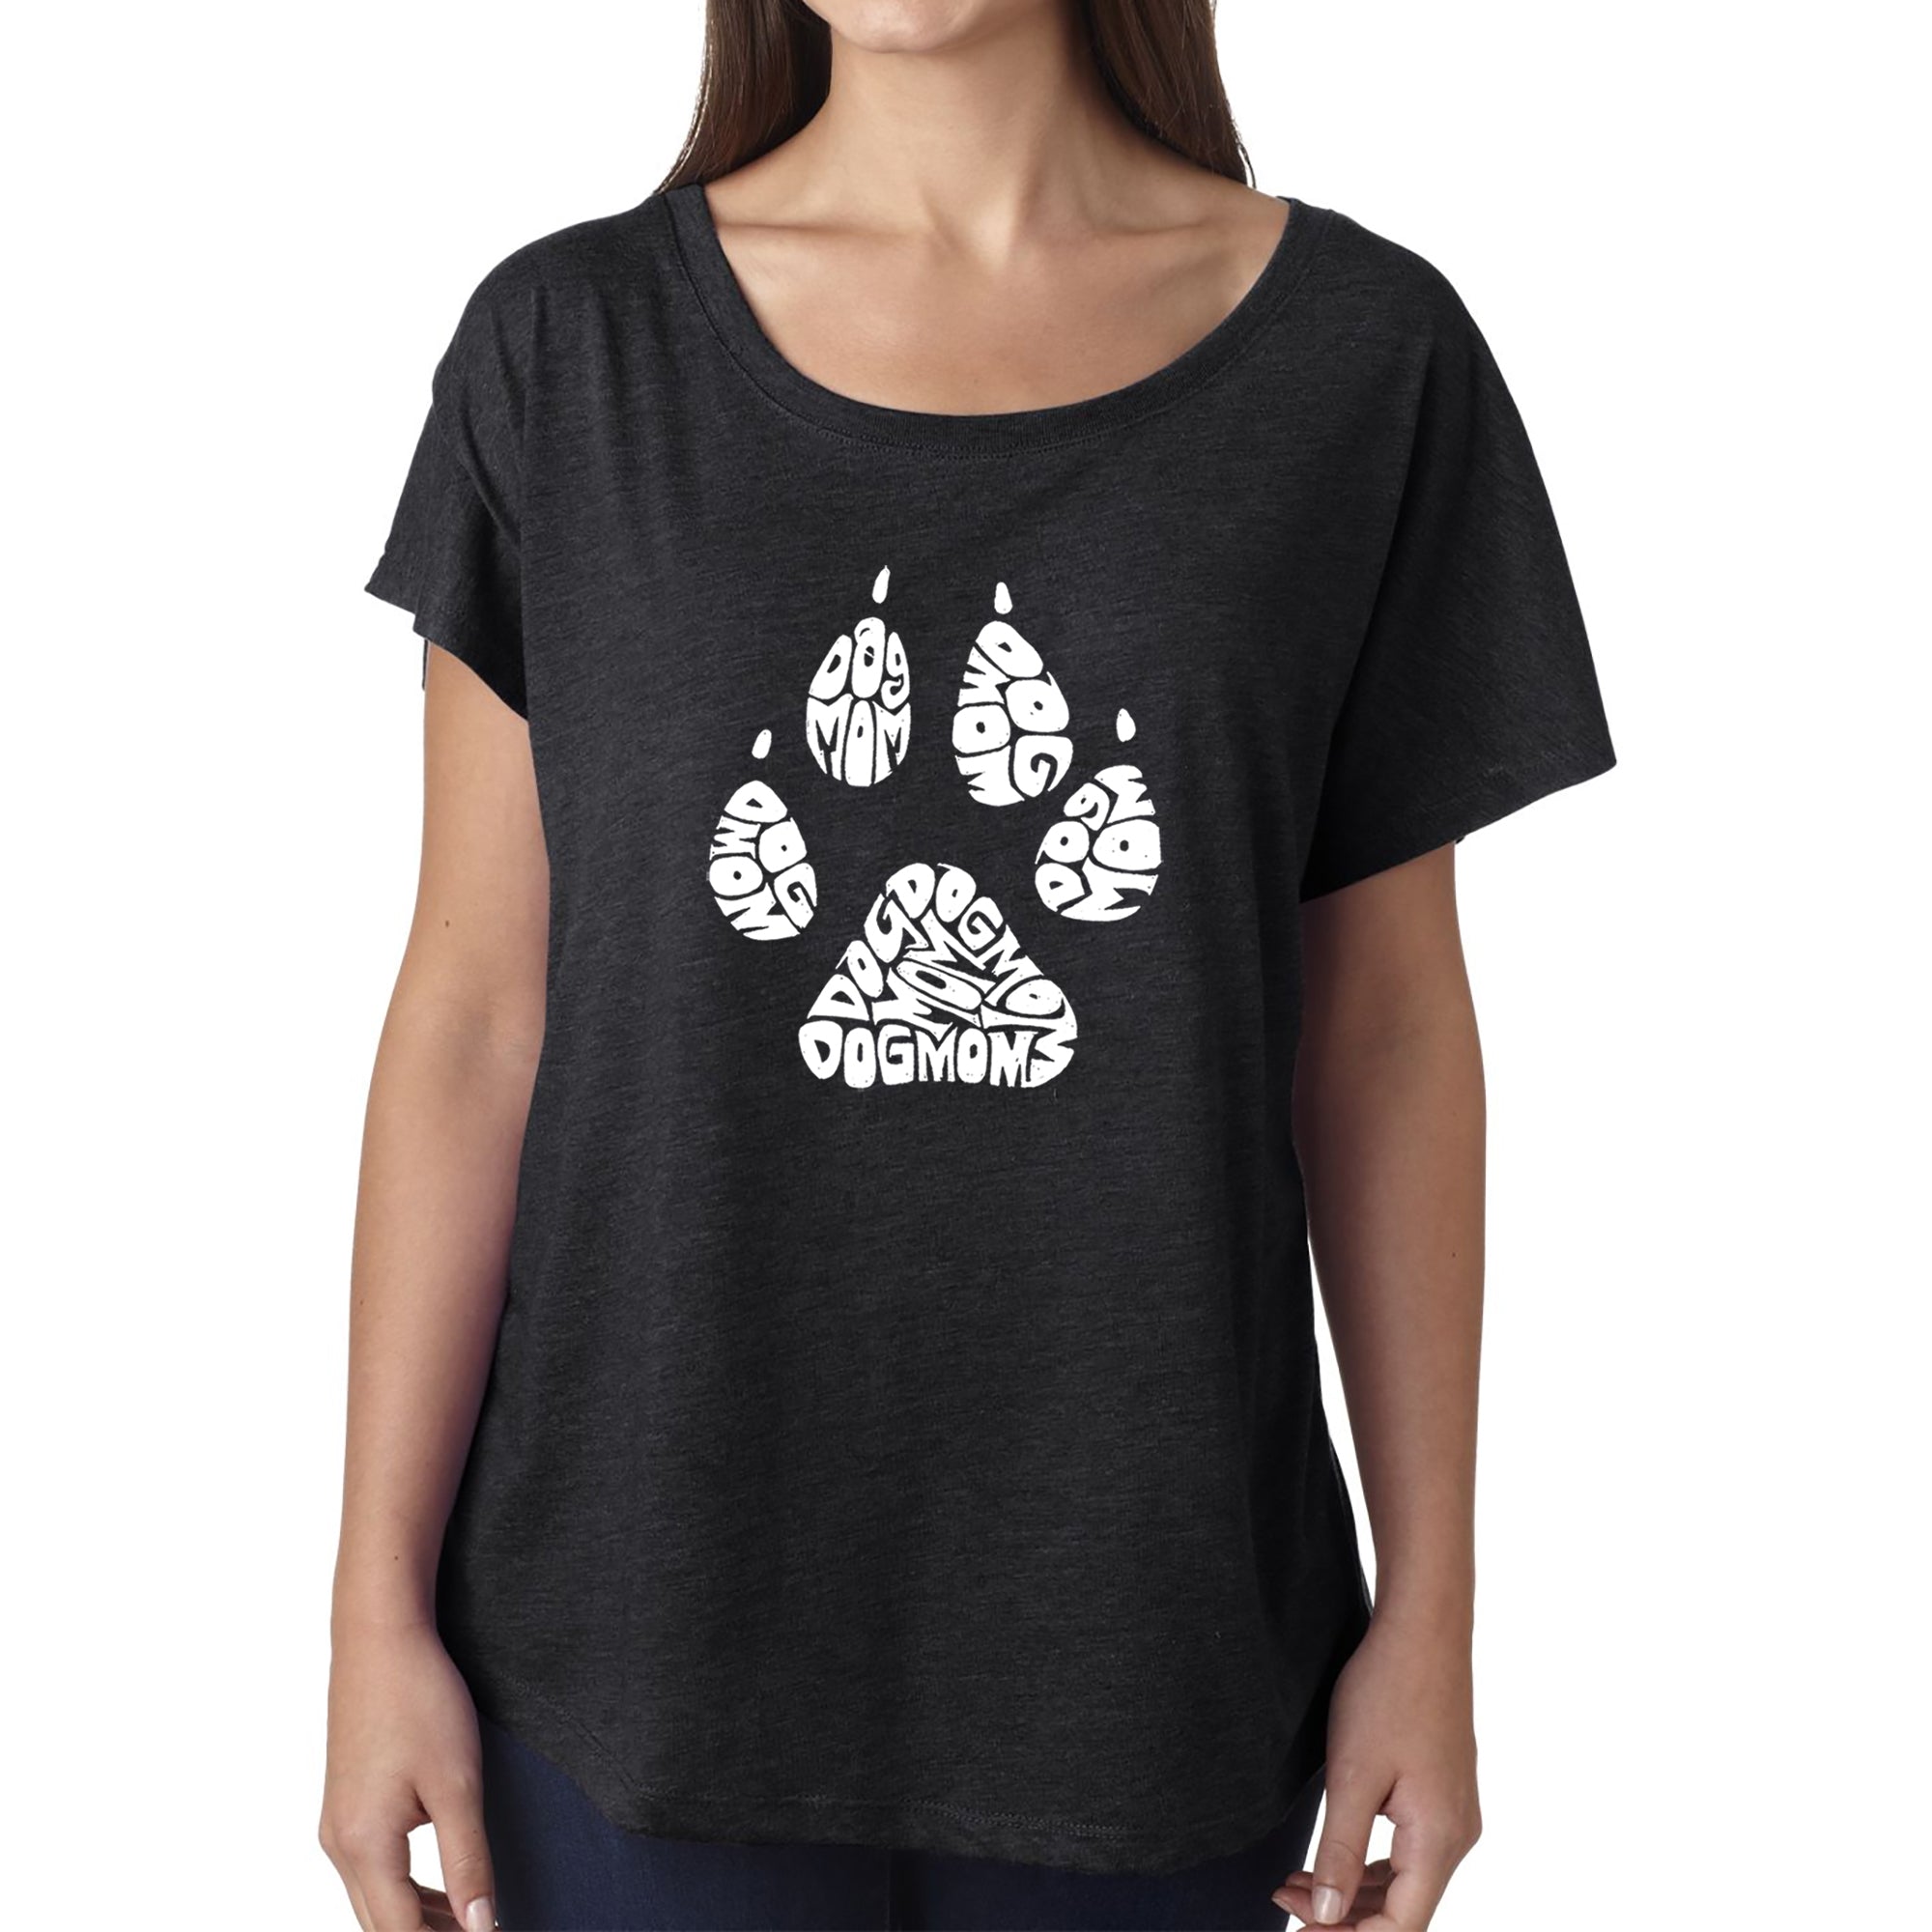 Dog Mom - Women's Loose Fit Dolman Cut Word Art Shirt - Black - Small